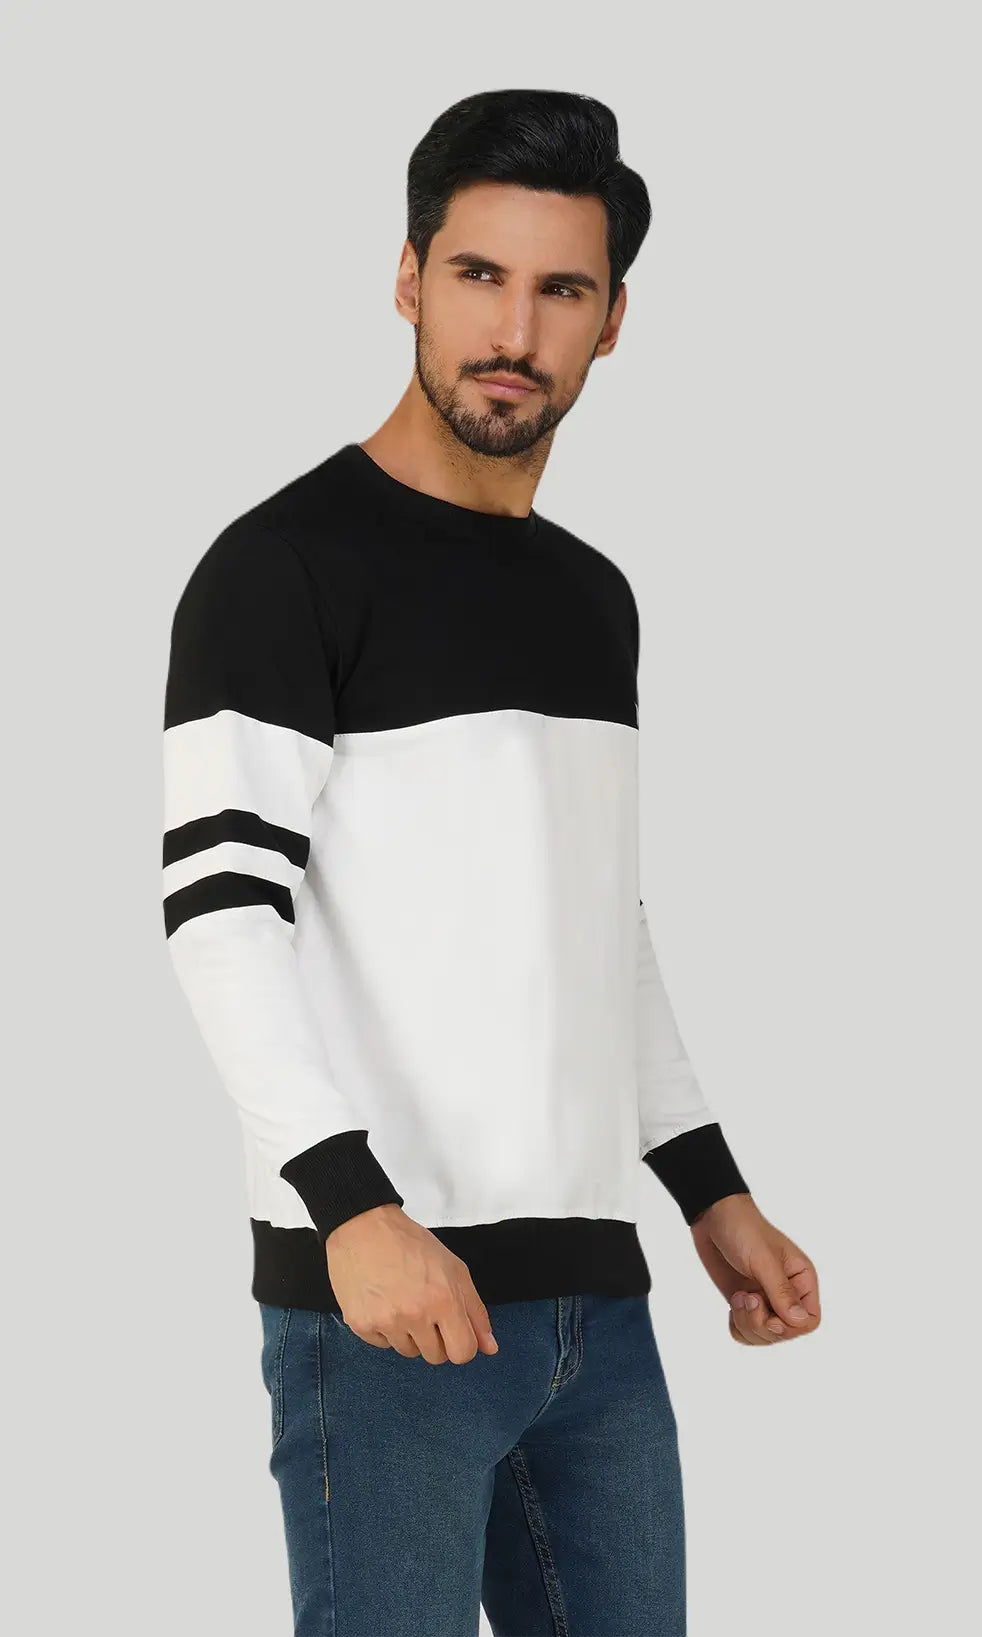 Mebadass Cotton Men's Winterwear ColorBlocked Sweatshirt - Black & White